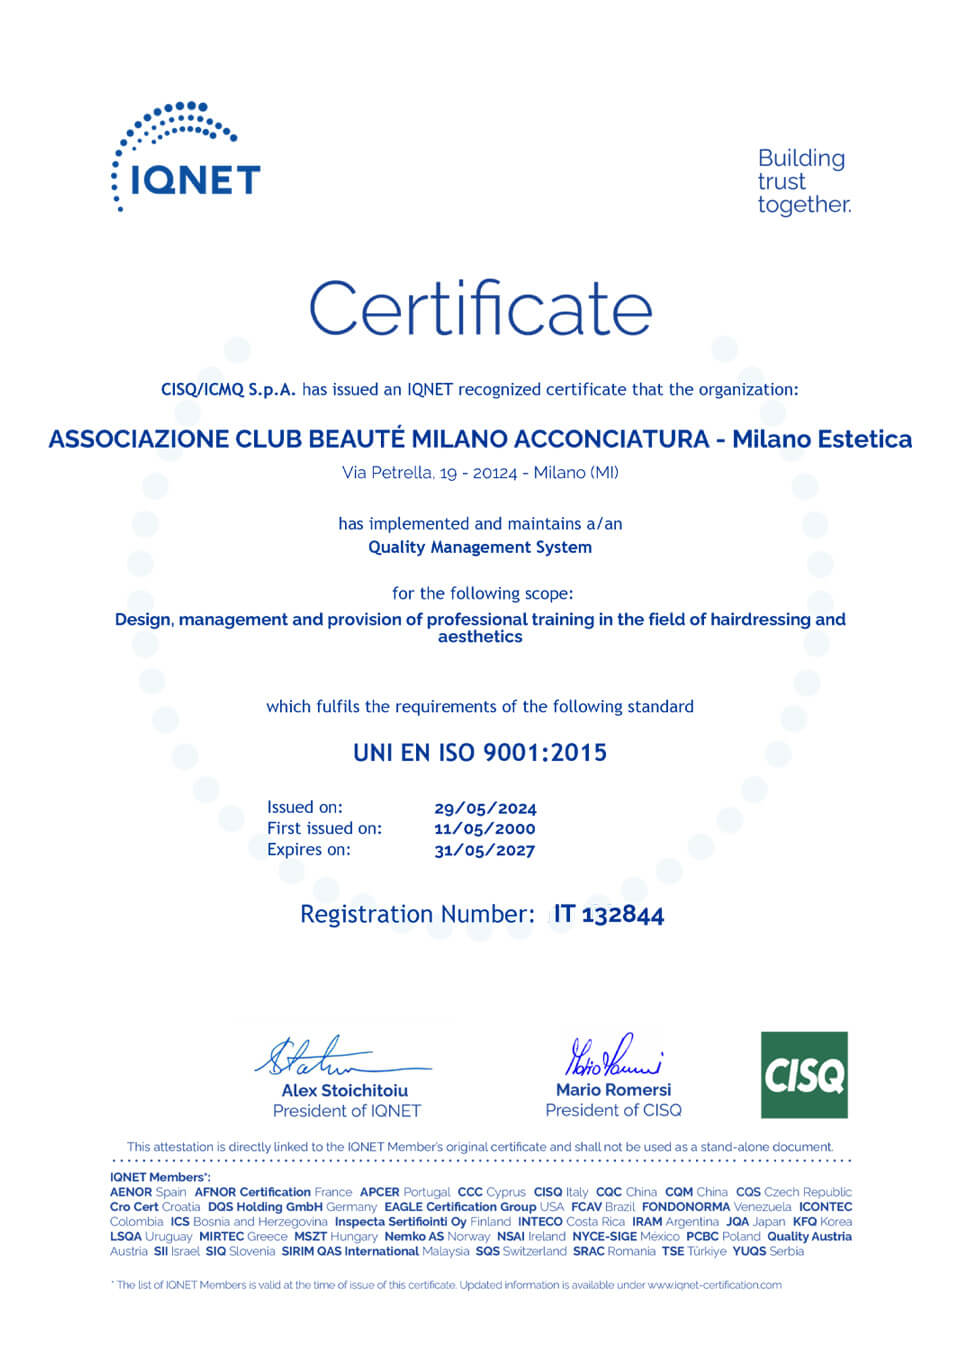 Certificato IQNet ISO 9001:2015 di Club Beauté